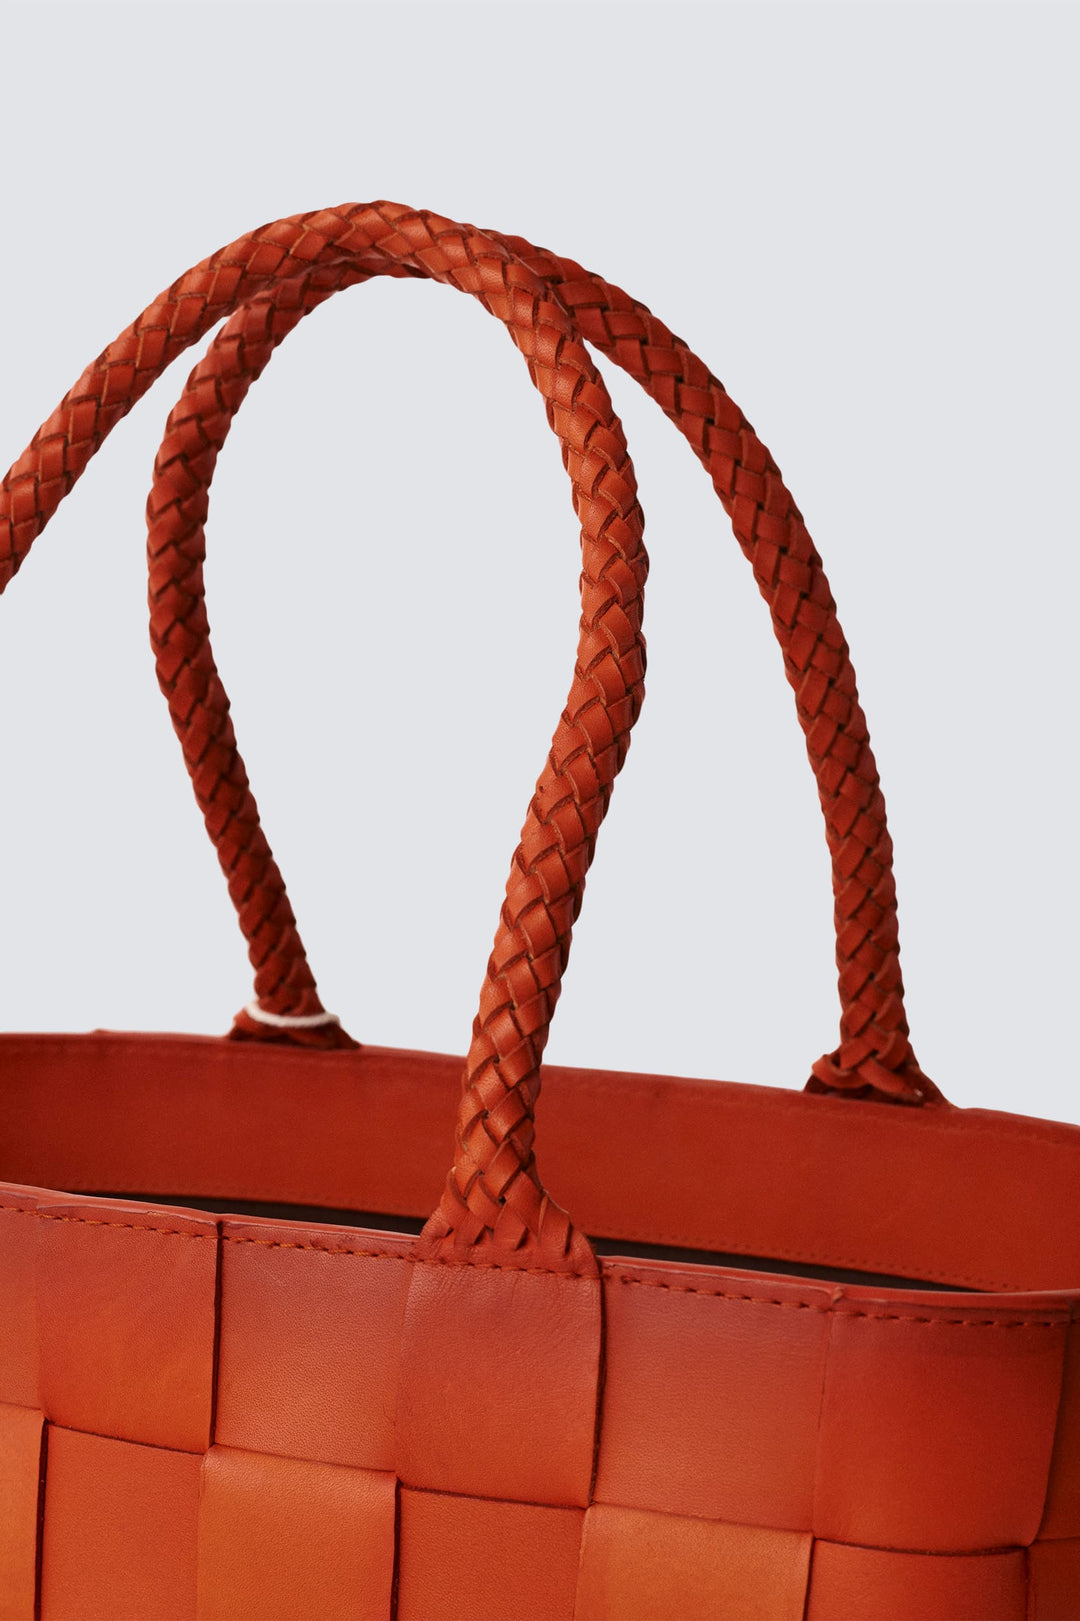 Handbag With Handles Genuine Italian Leather Handmade in 